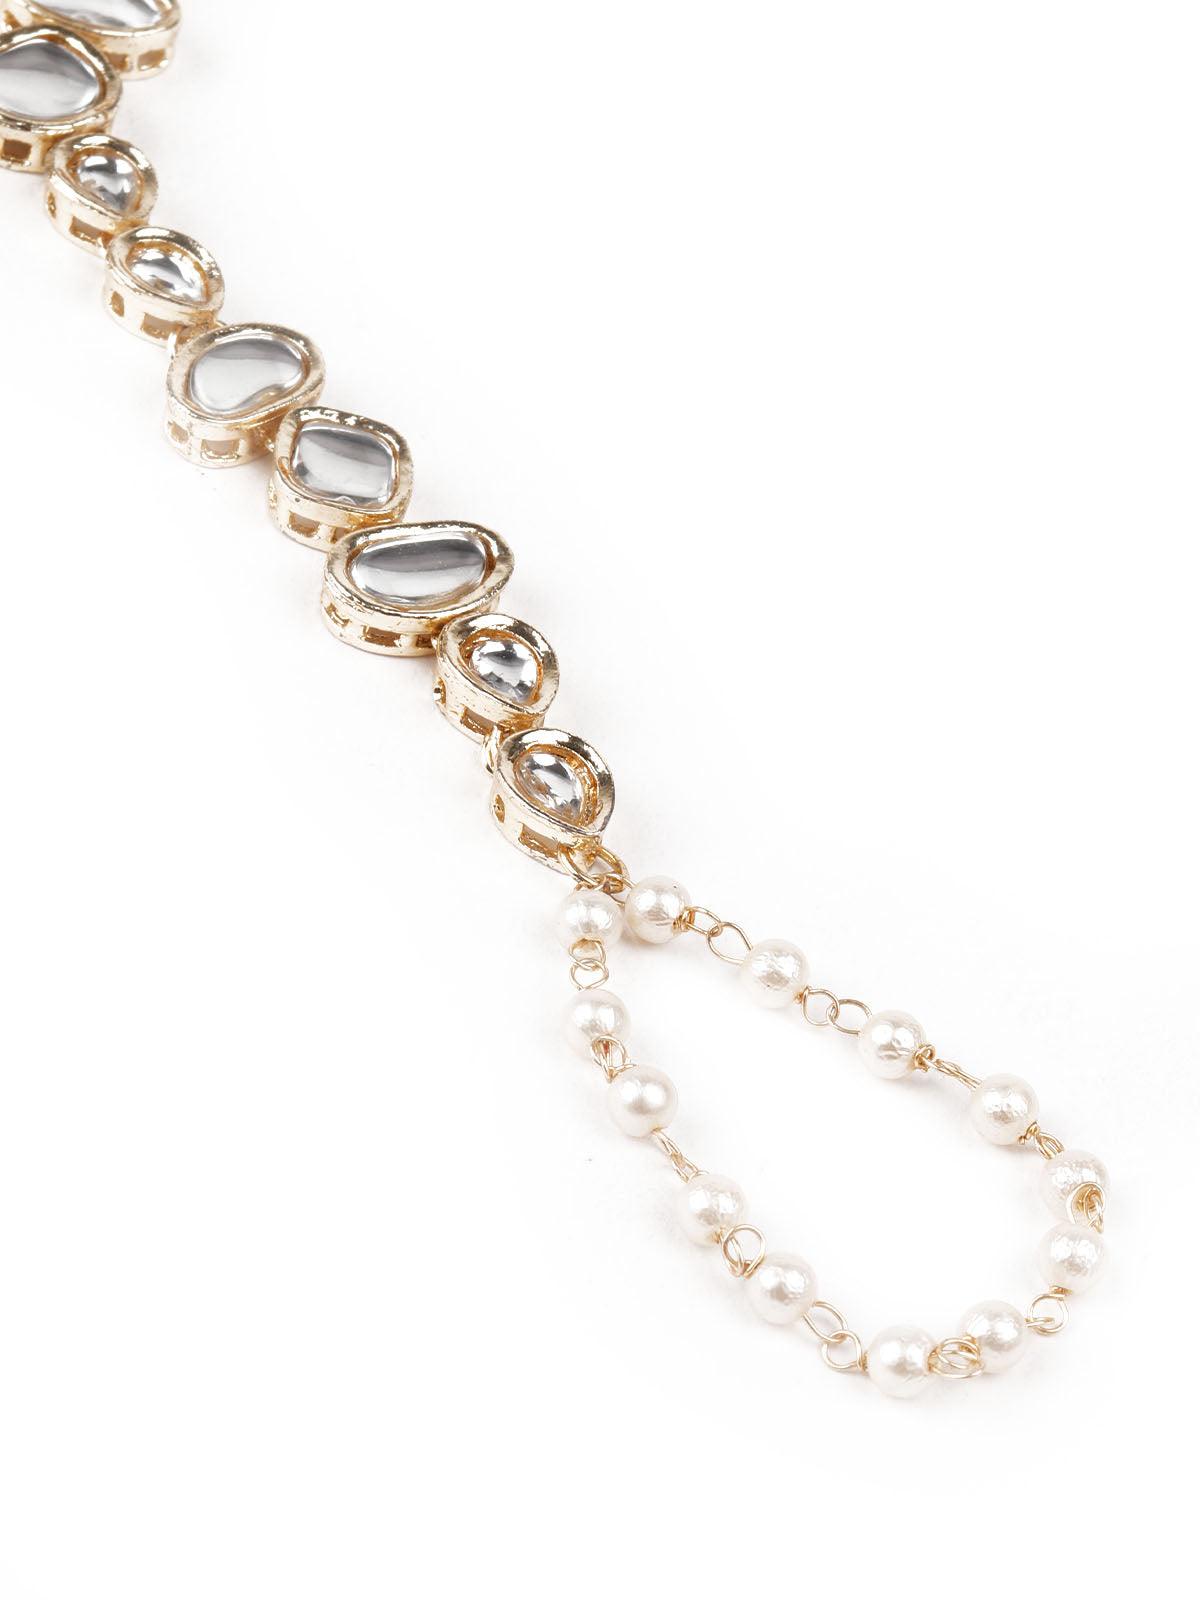 Women's Stylish White And Gold Hand Bracelet - Odette